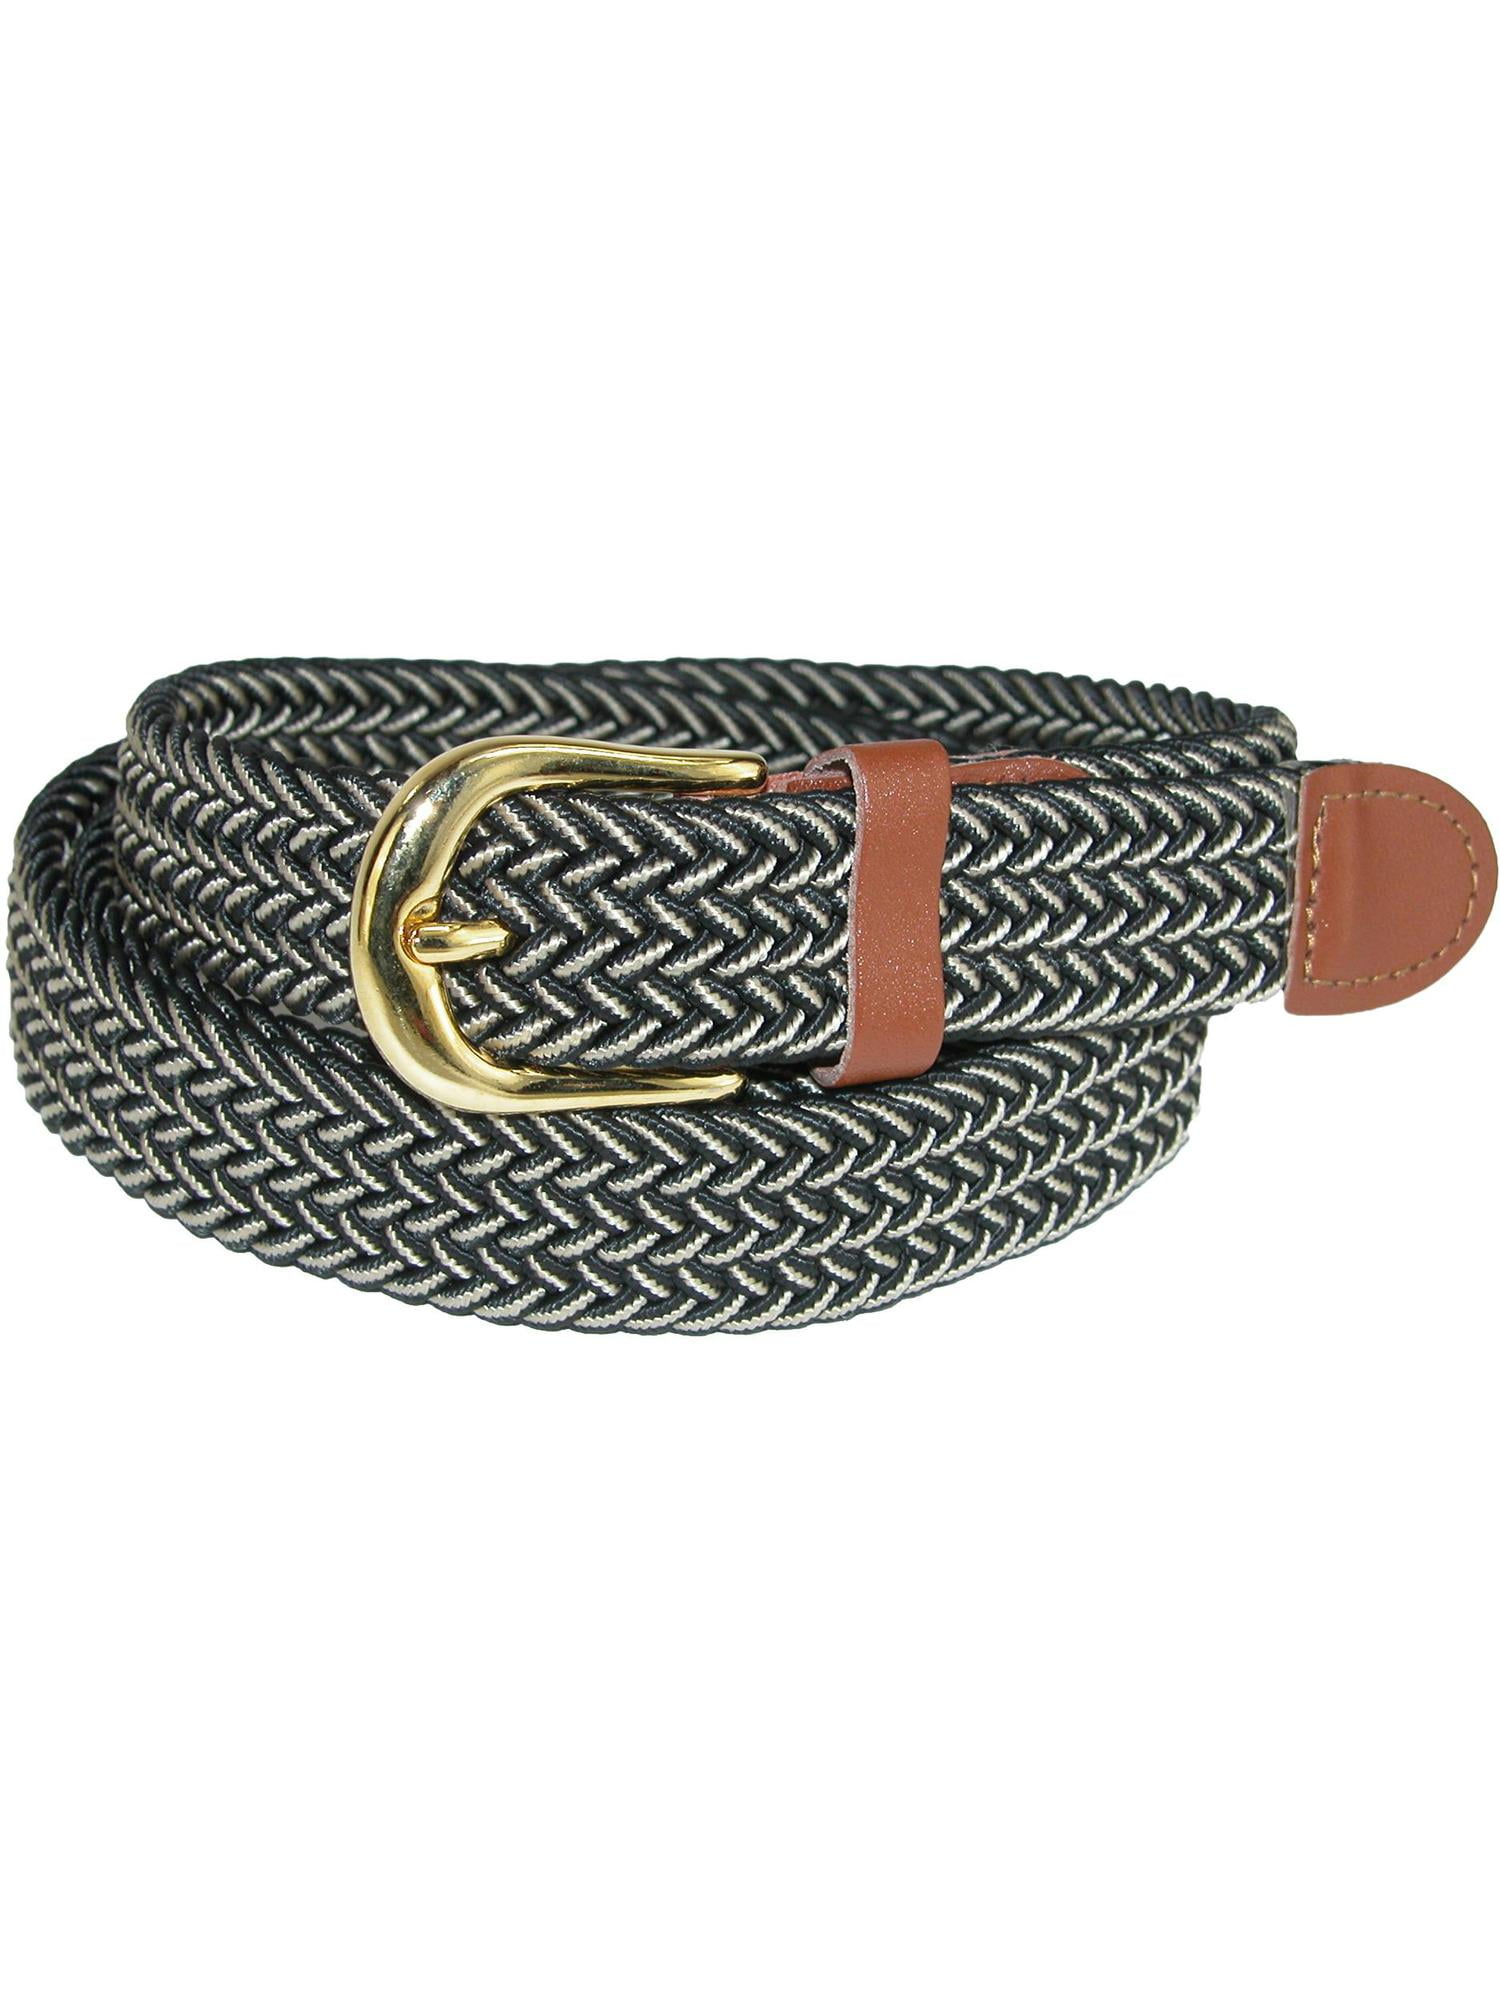 CTM - CTM® Multi Color Elastic Braided Belt (Women's) - Walmart.com ...